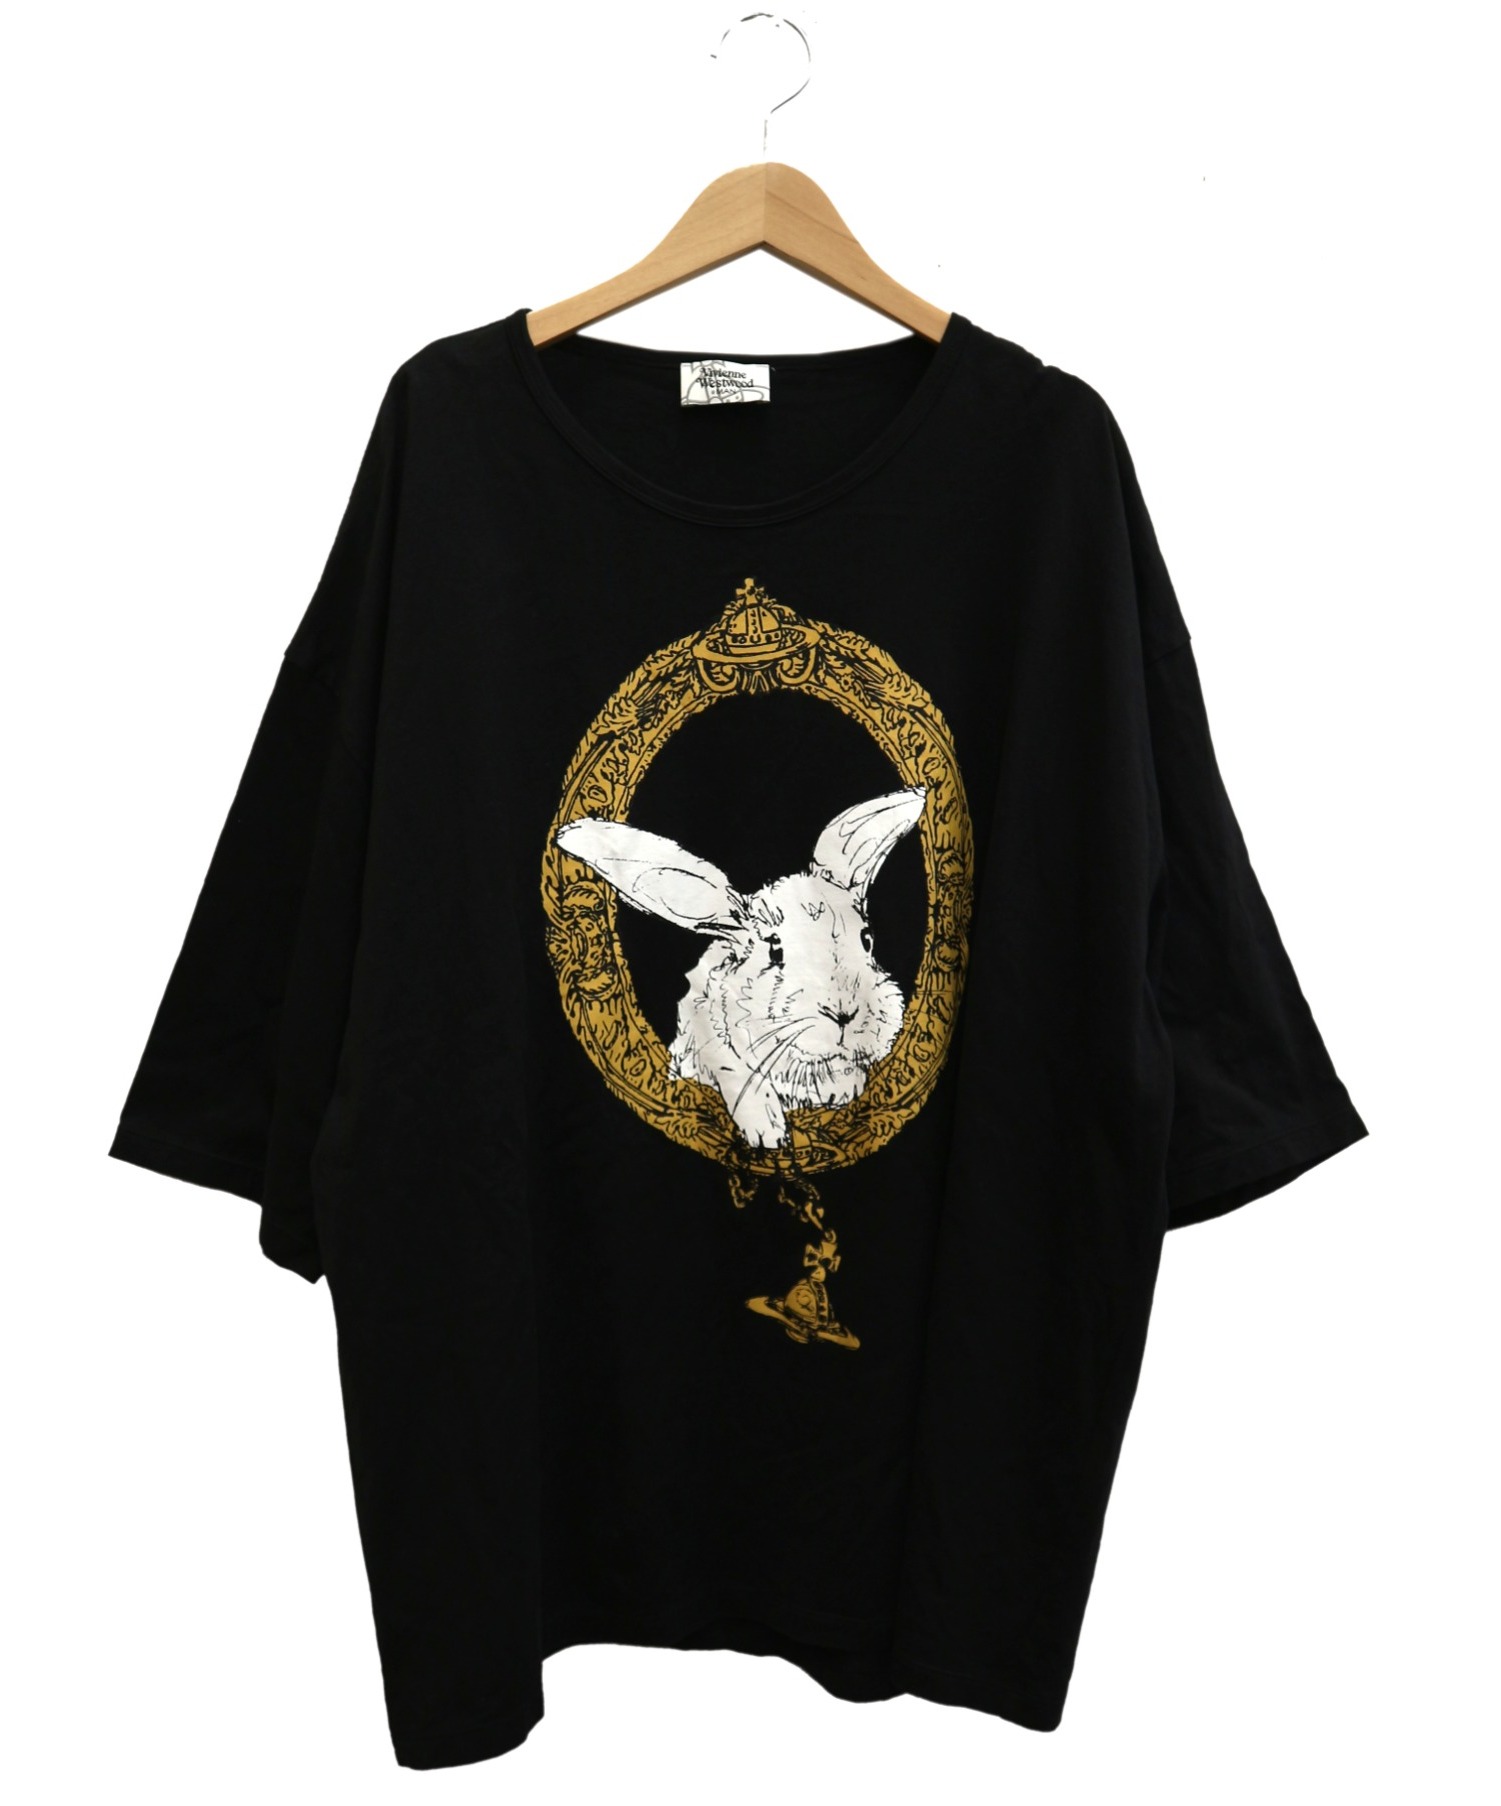 Vivienne Westwood man (ヴィヴィアン ウェストウッド マン) バニーインフレームビッグTシャツ ブラック サイズ:F  189050 5101